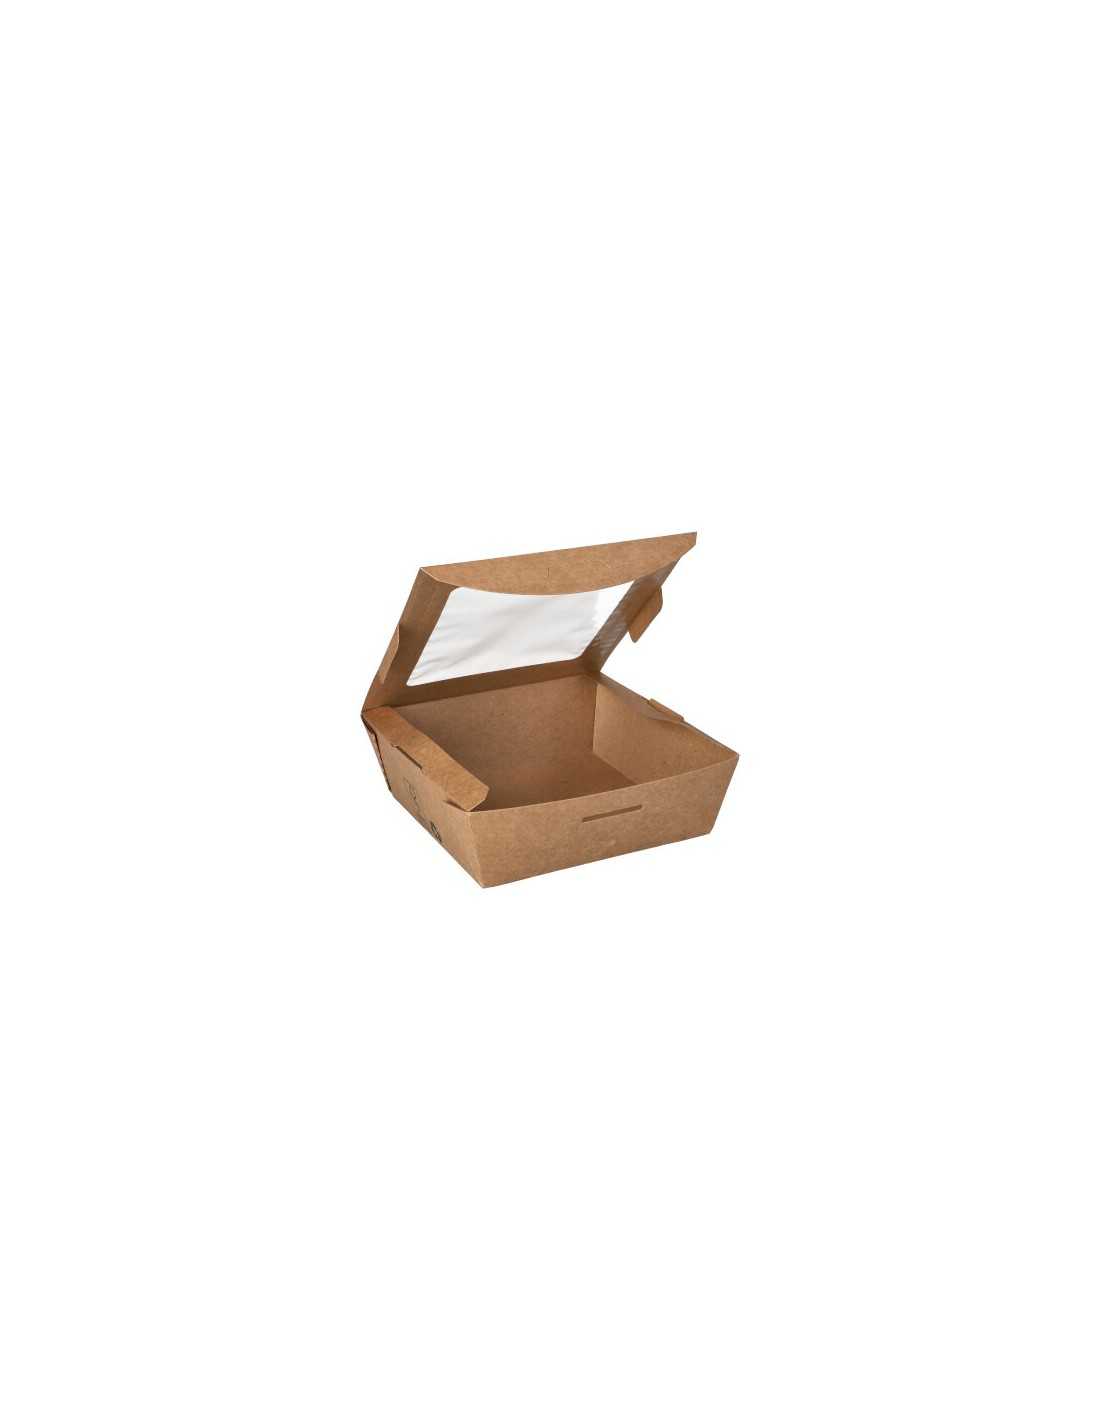 Caja Con Ventana Kraft 15,3 x 12,1 x 6,4 cm. (Pack 25 Uds.)